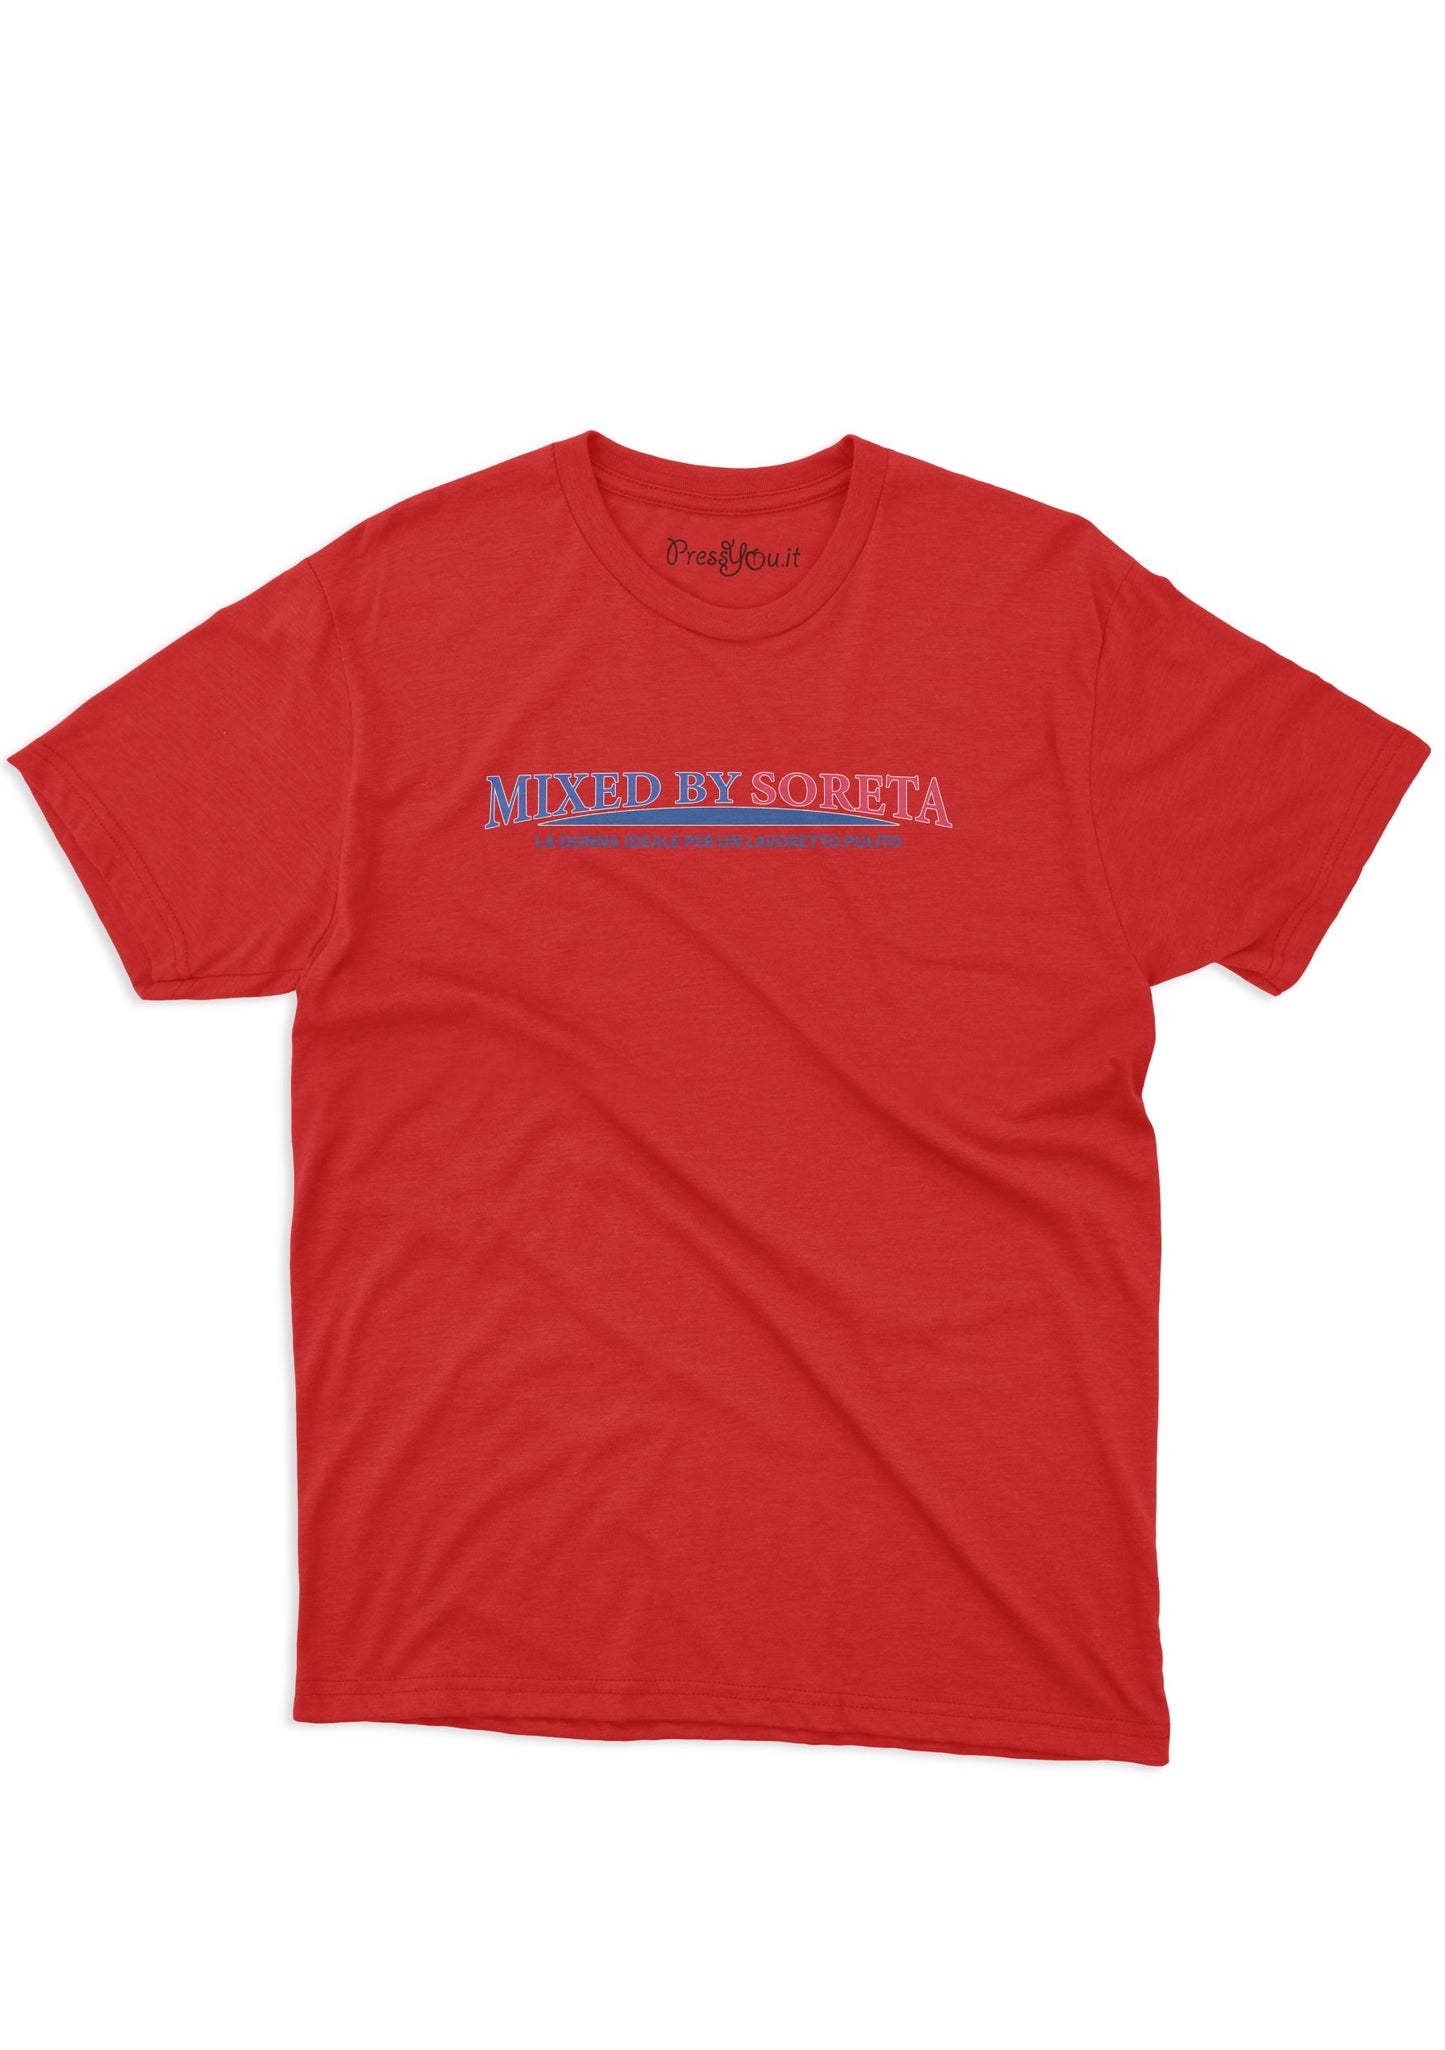 t-shirt-mixed by soreta the ideal woman for a clean job, fun gift idea